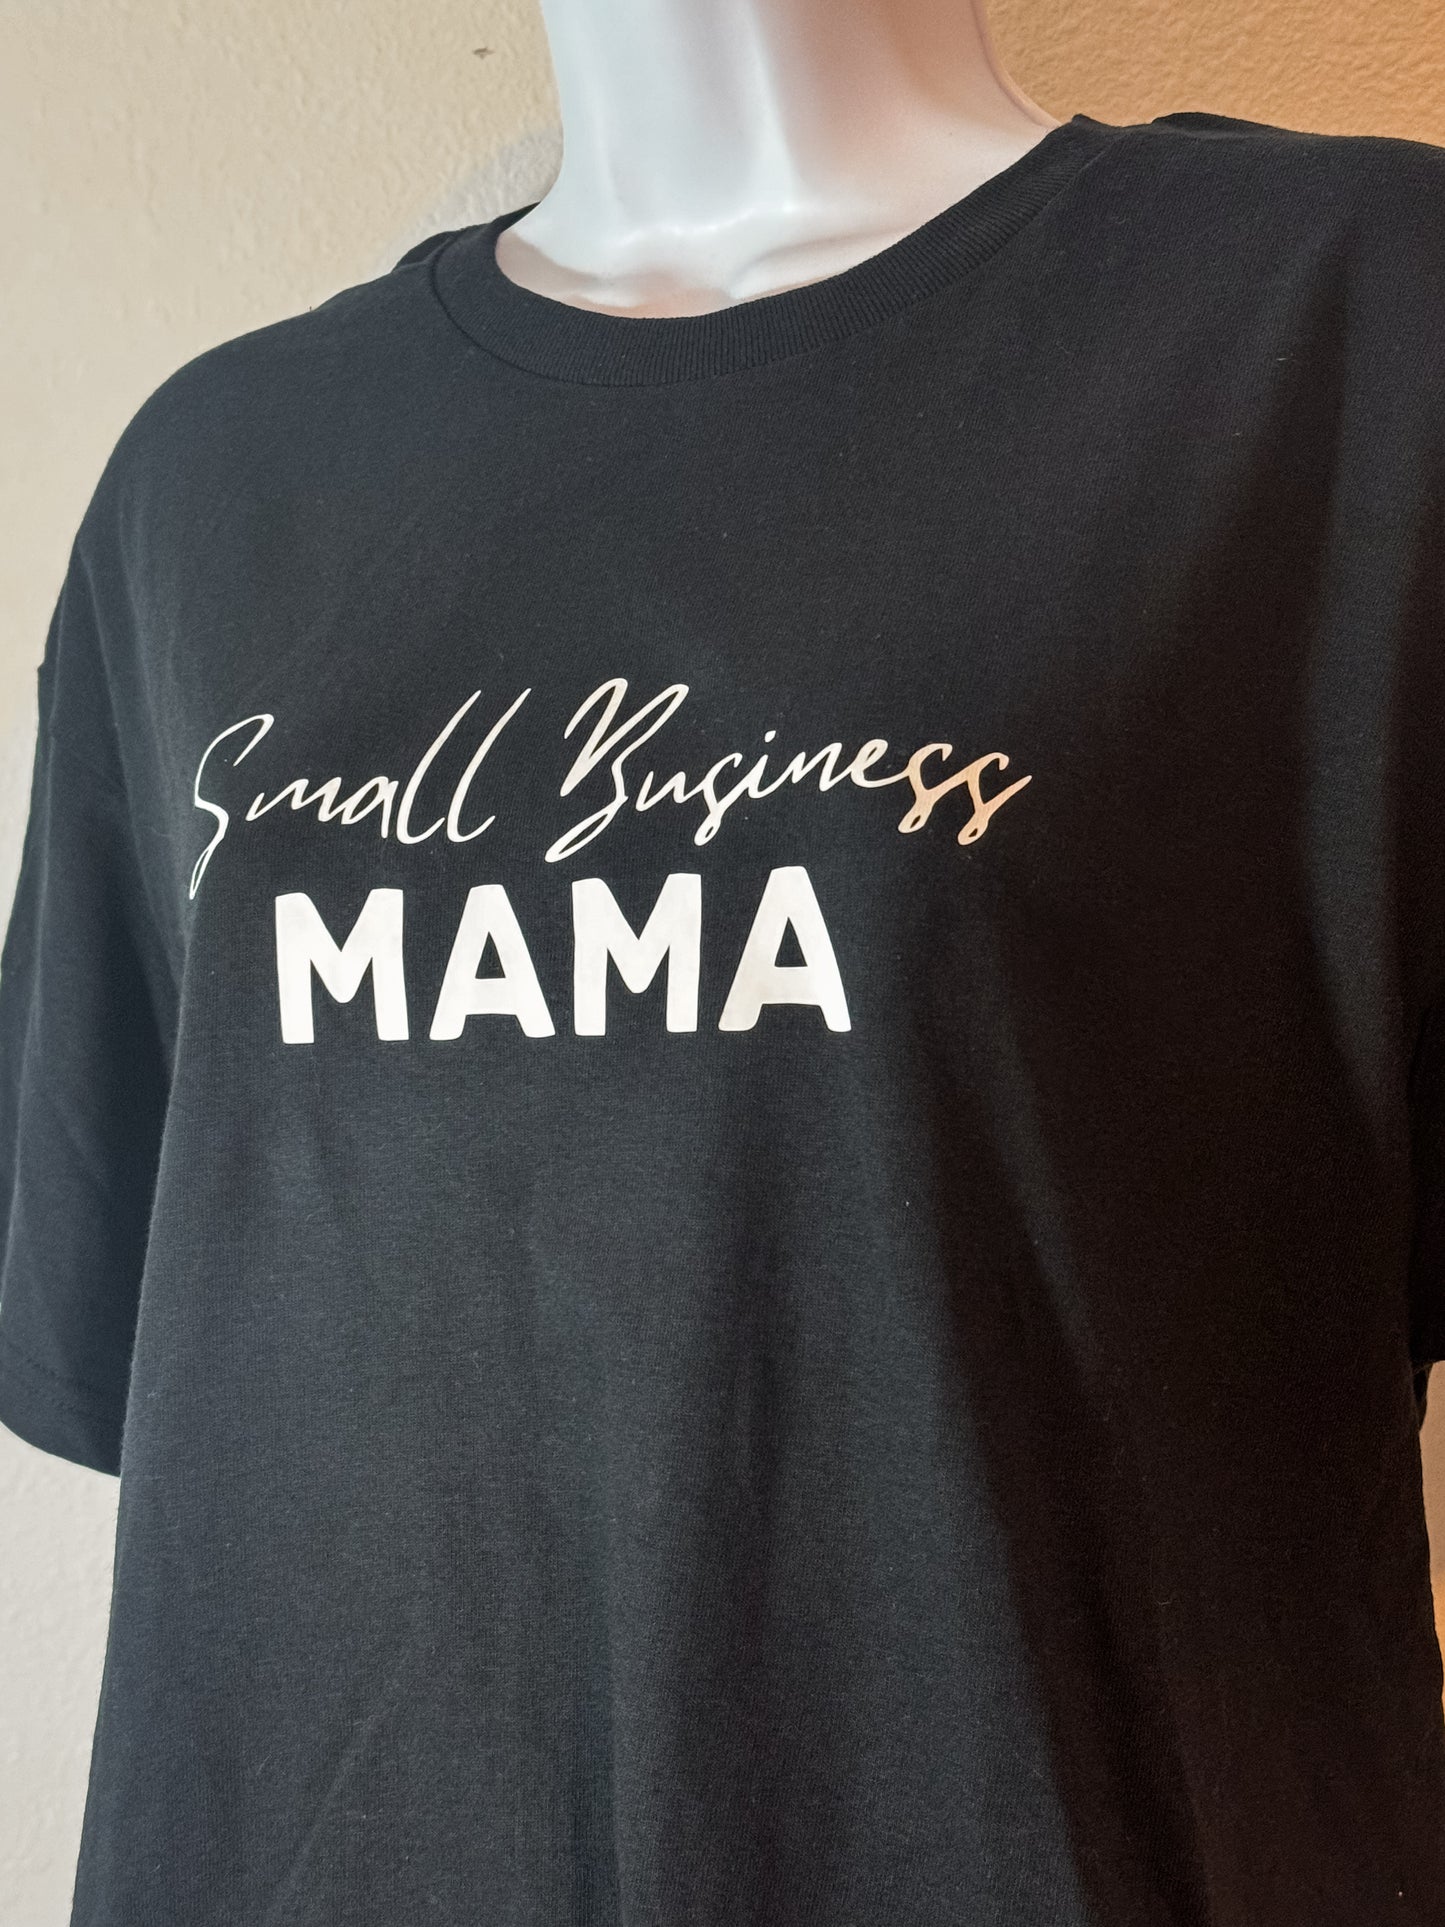 Small Business MAMA Tee